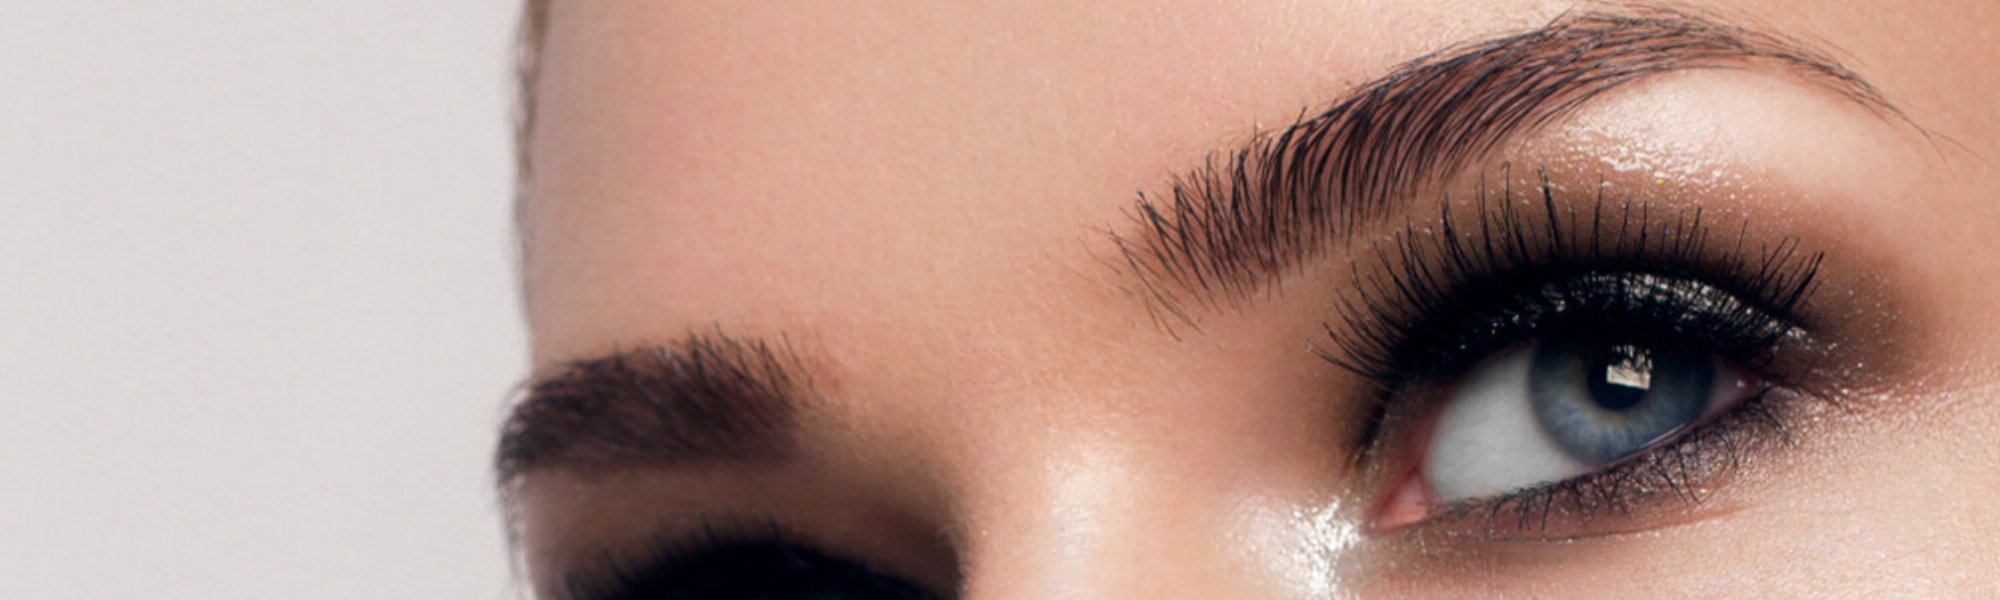 Closeup shot of an attractive woman's eyes